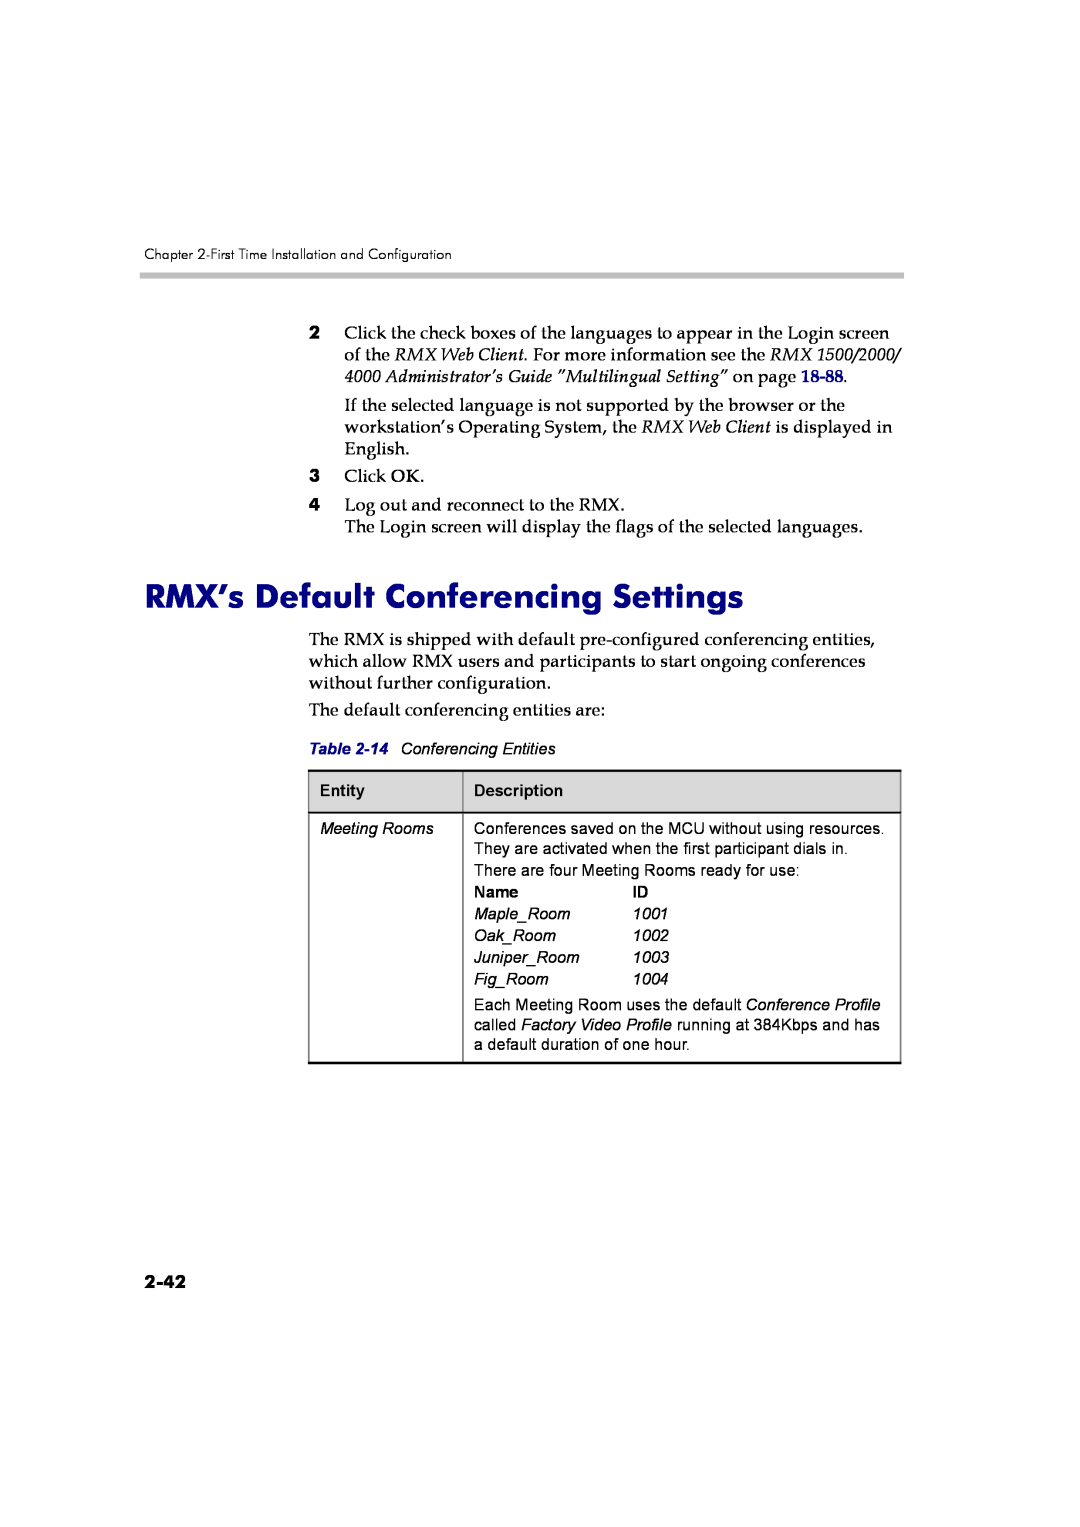 Polycom DOC2560B manual RMX’s Default Conferencing Settings, 2-42 